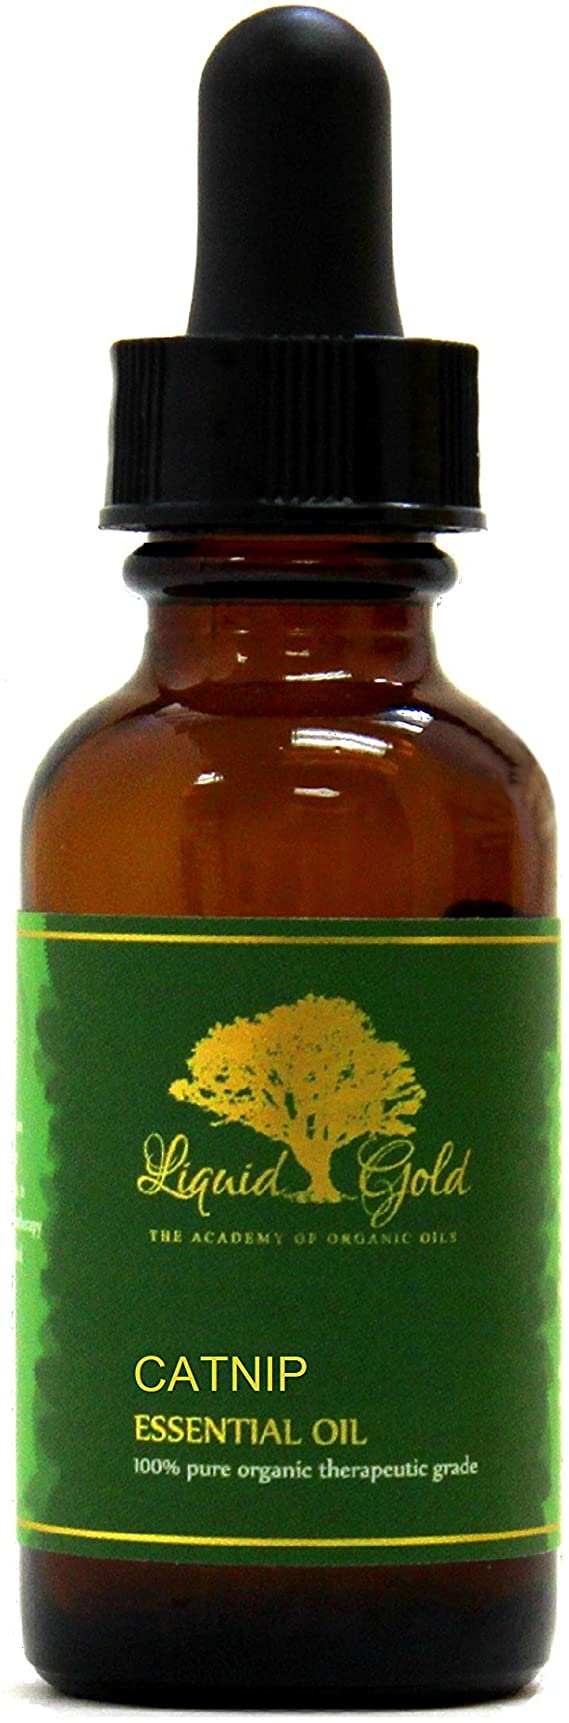 1.1 Oz with a Glass Dropper Premium Catnip Essential Oil Liquid Gold Pure Organic Natural Aromatherapy